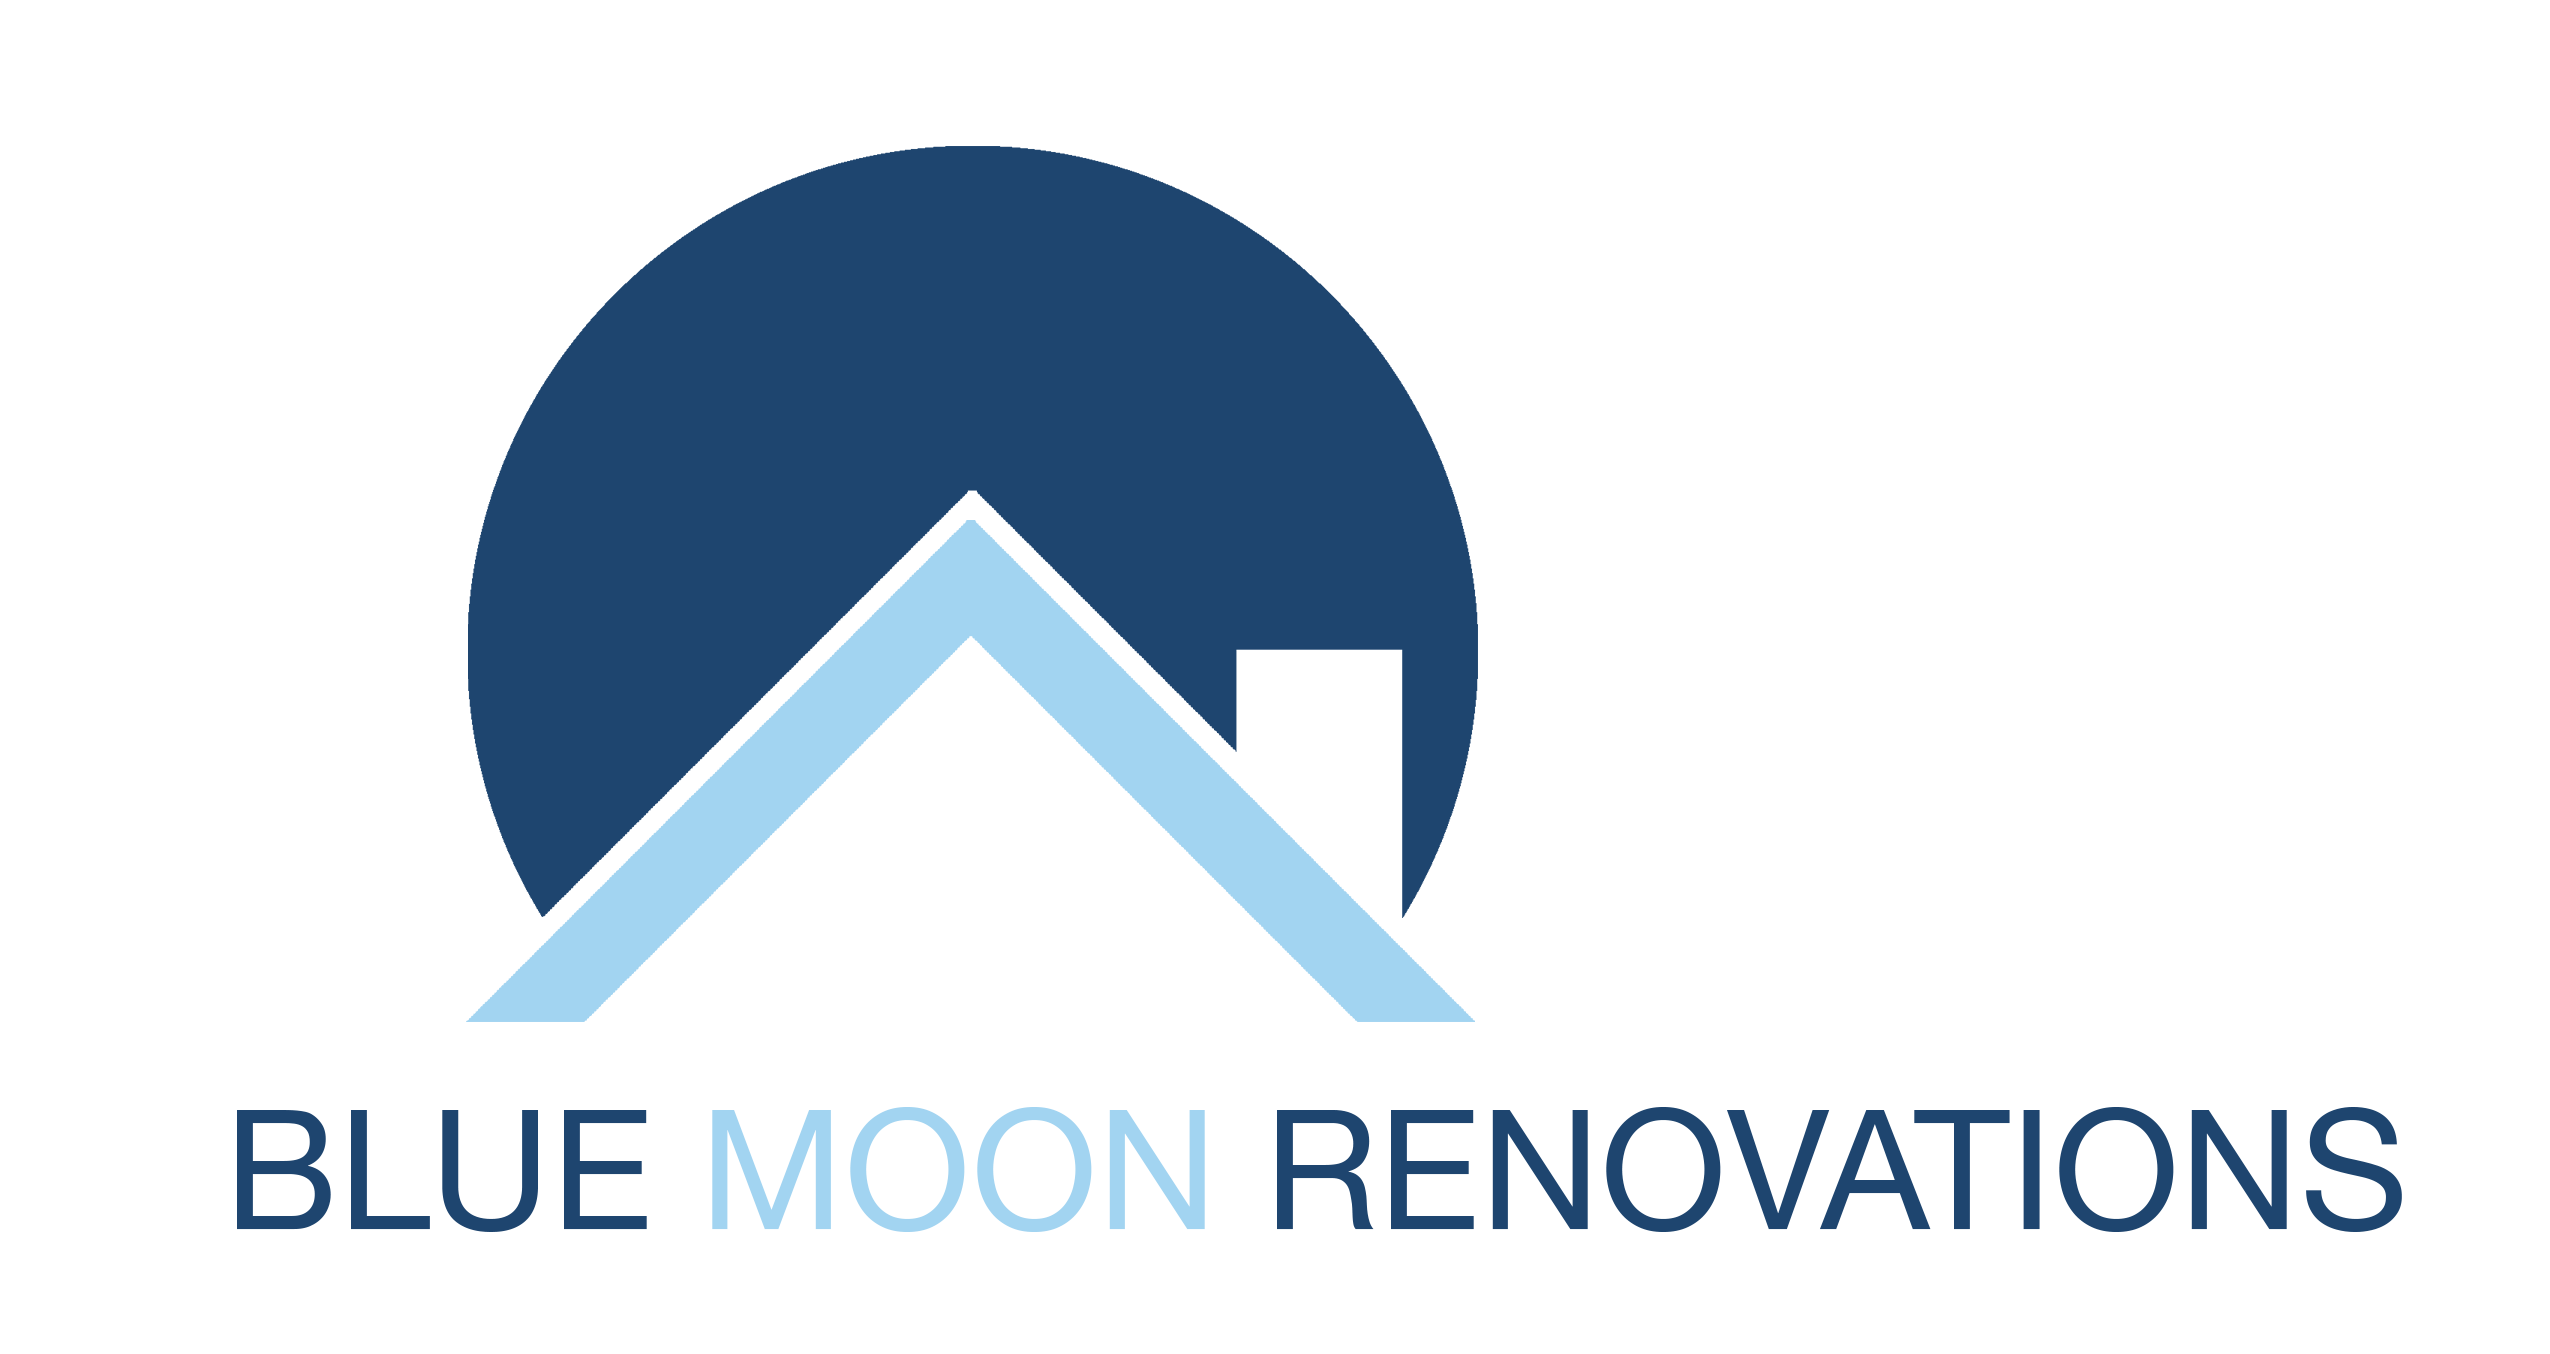 Blue Moon Renovations, LLC Logo